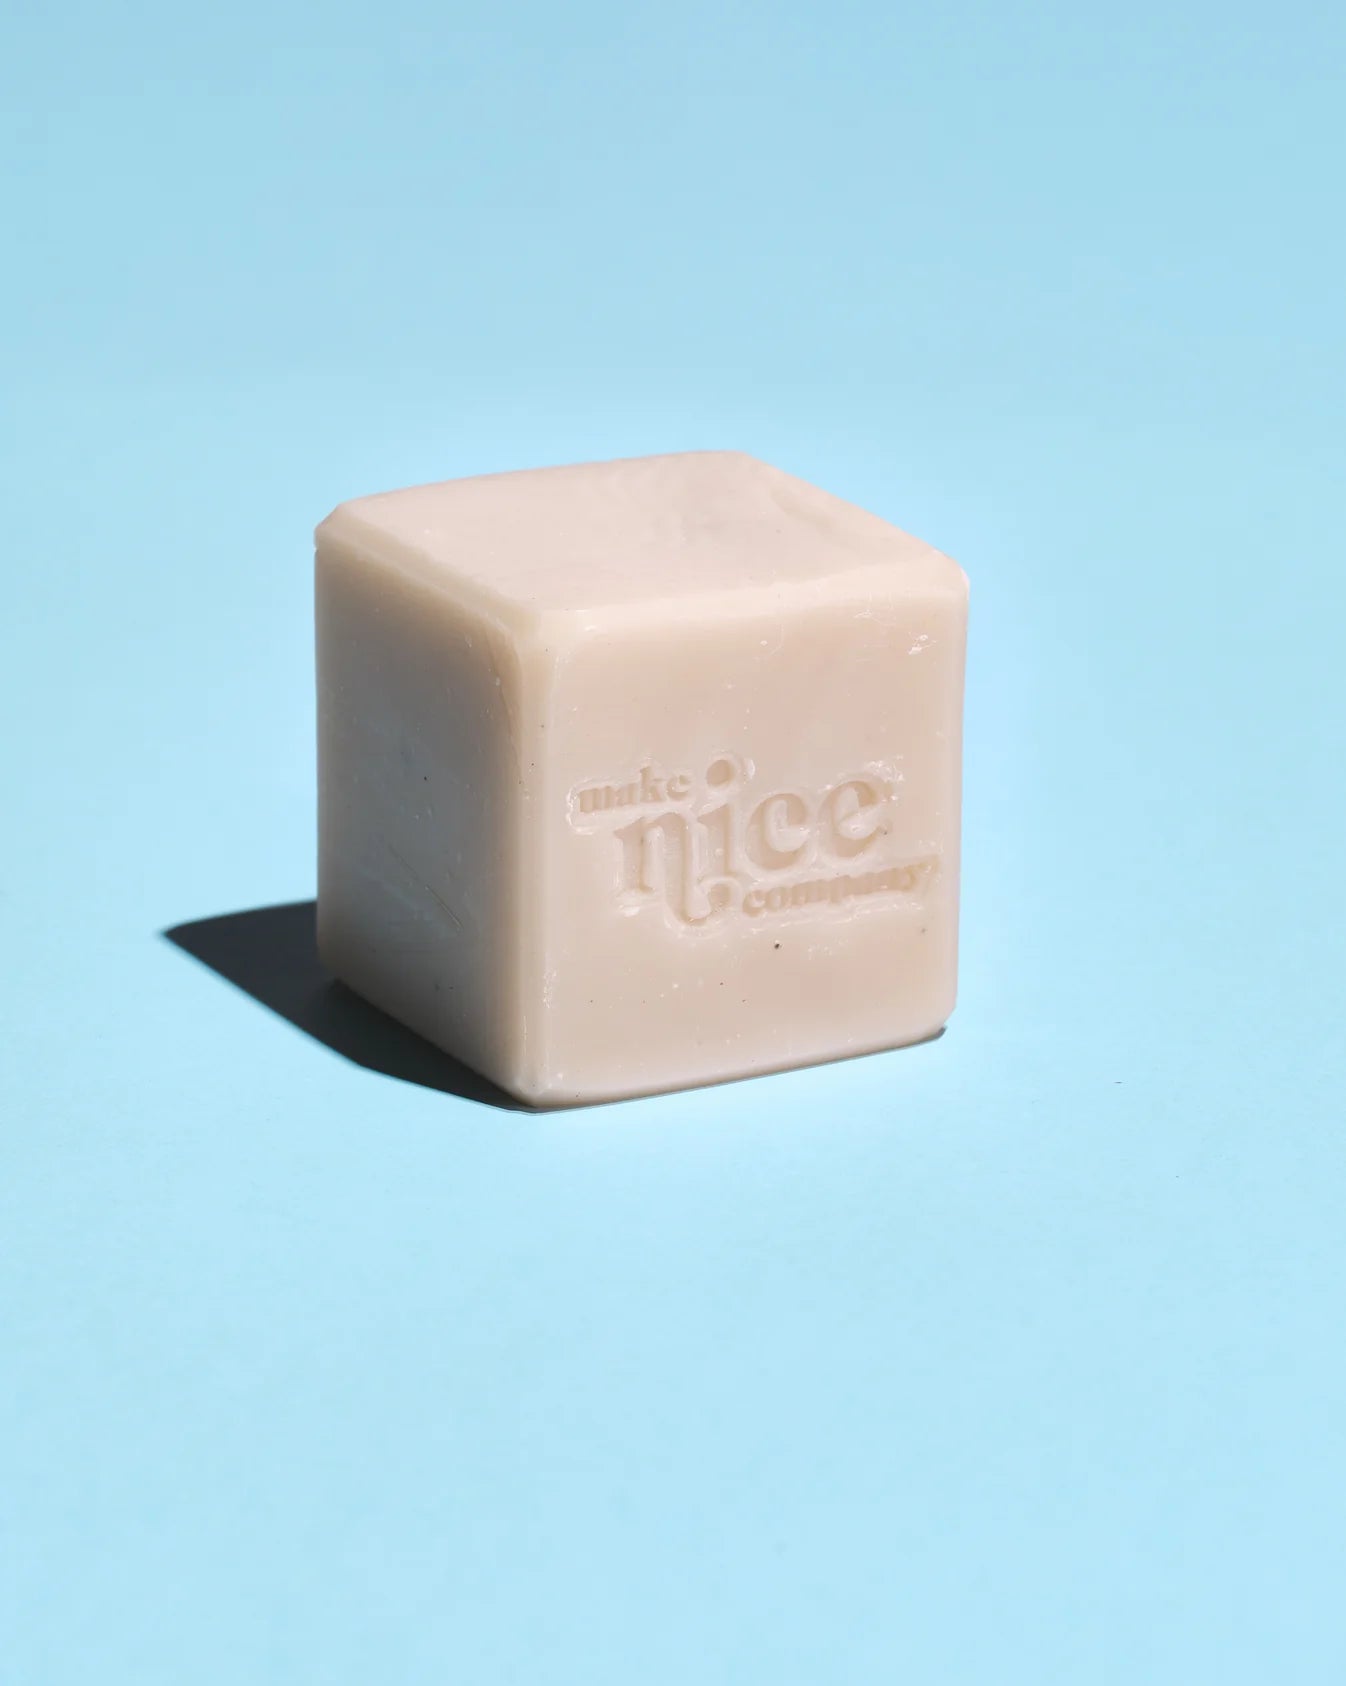 Make Nice Co. - Solid Dish Soap - Mint & Eucalyptus (240g)